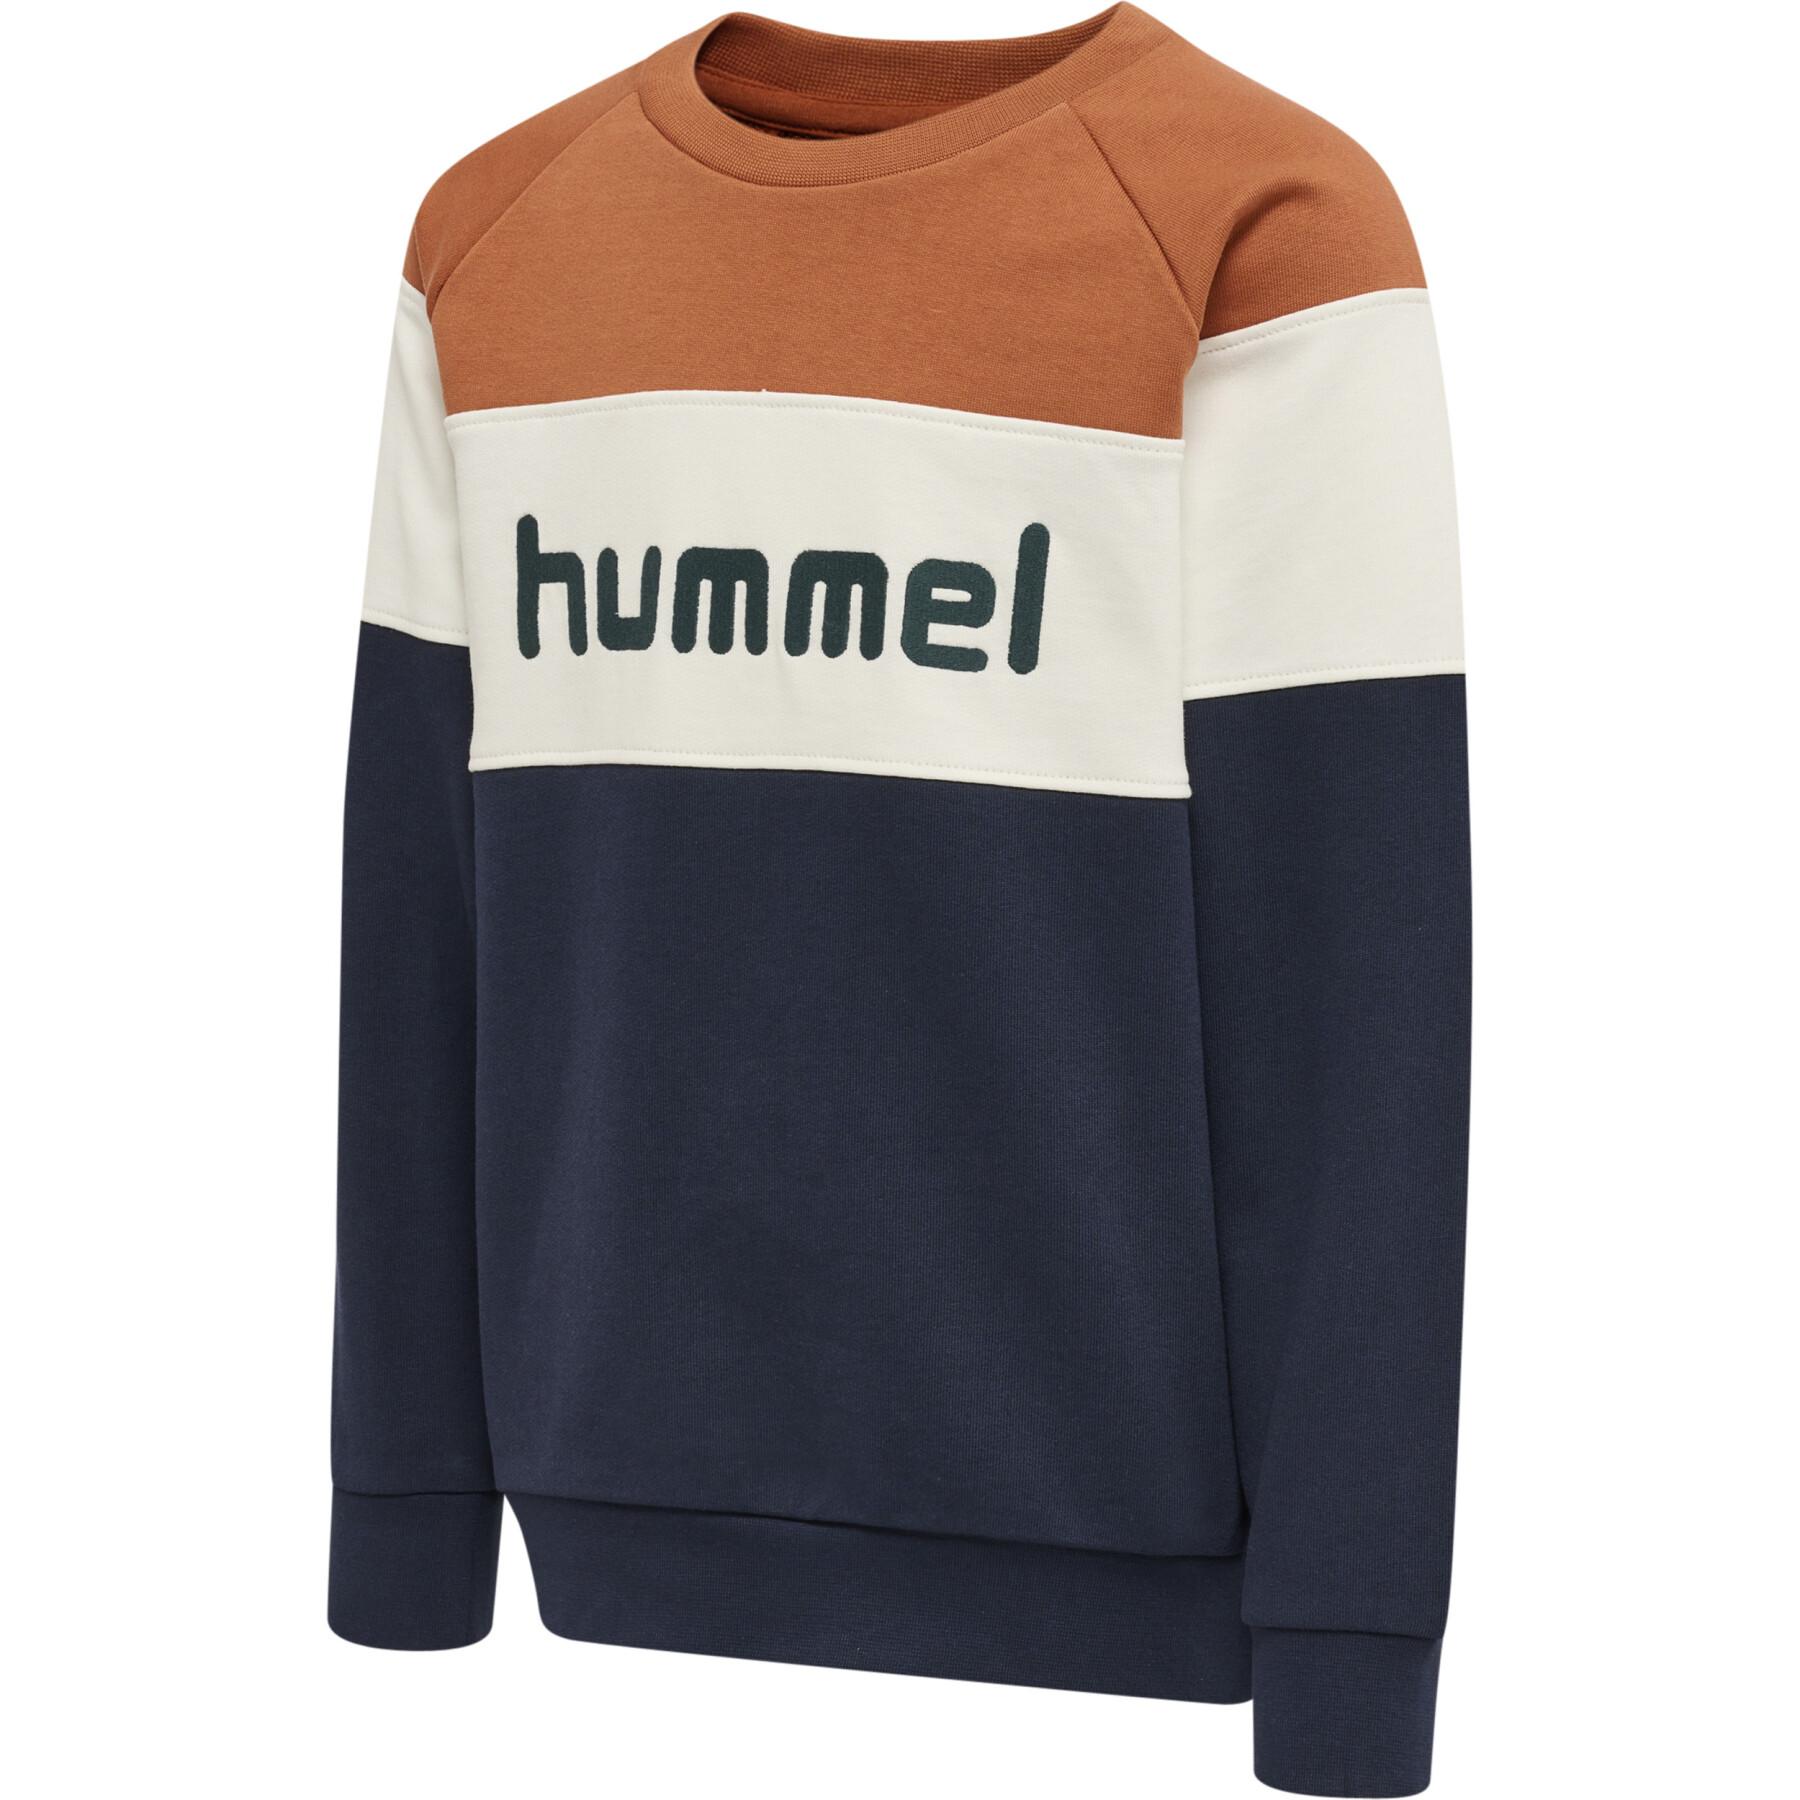 Sweatshirt Kind Hummel Claes